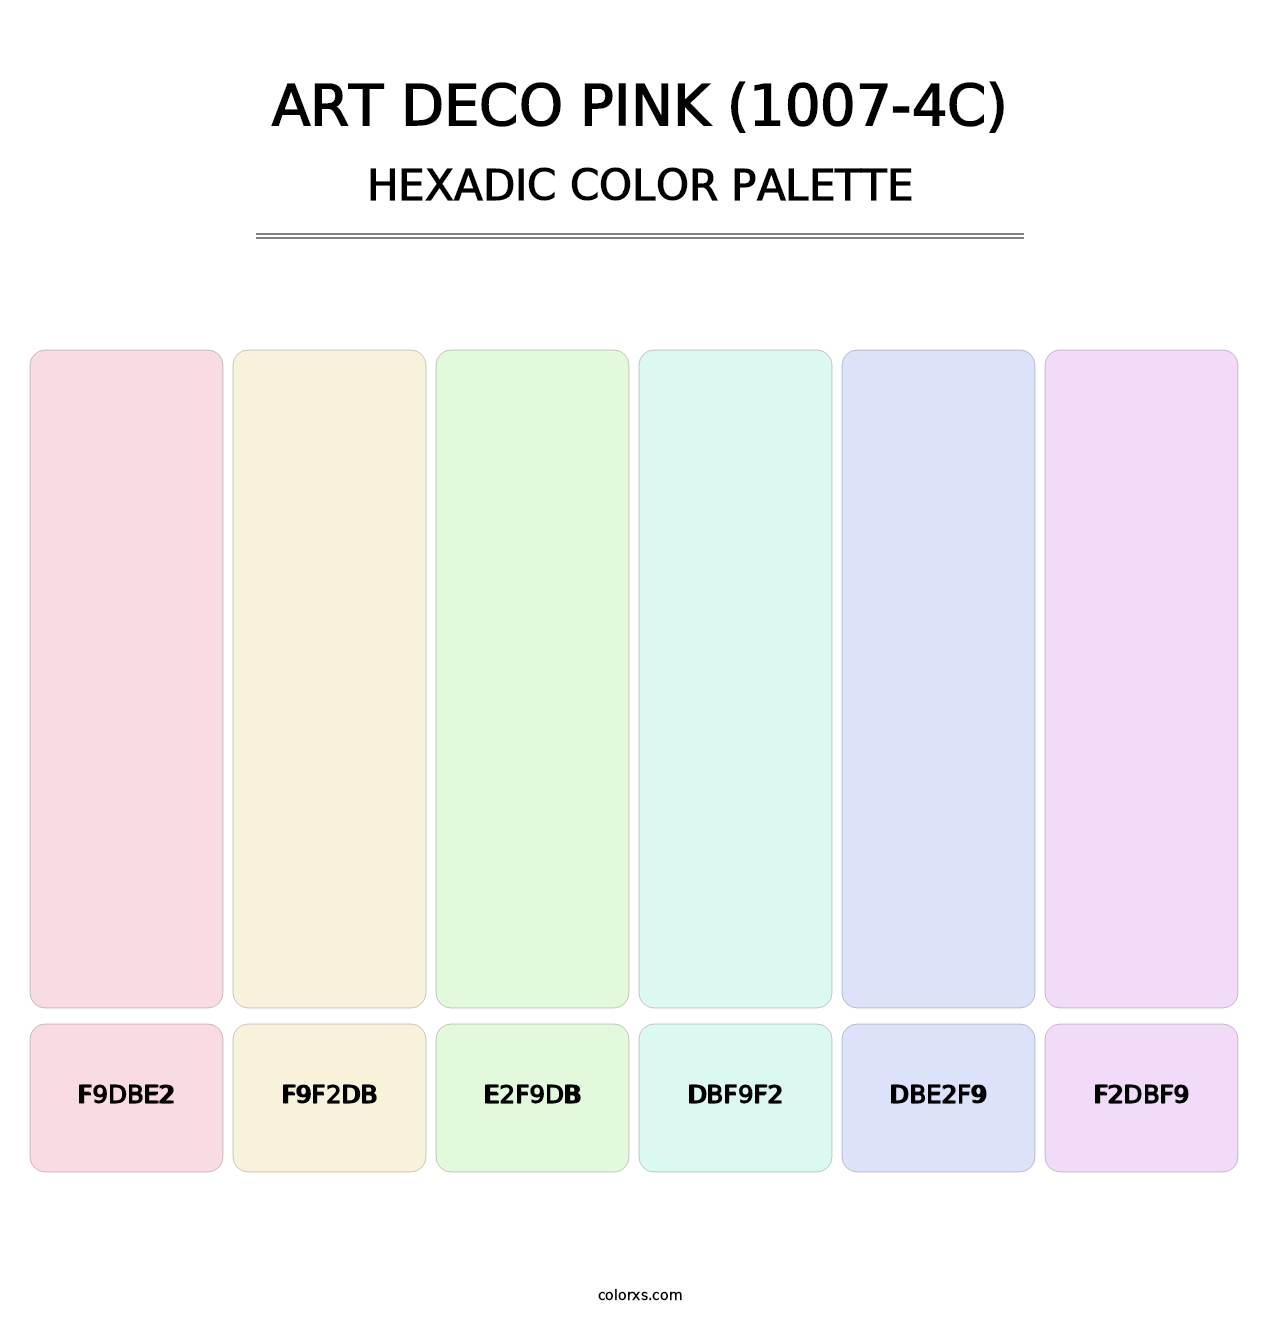 Art Deco Pink (1007-4C) - Hexadic Color Palette